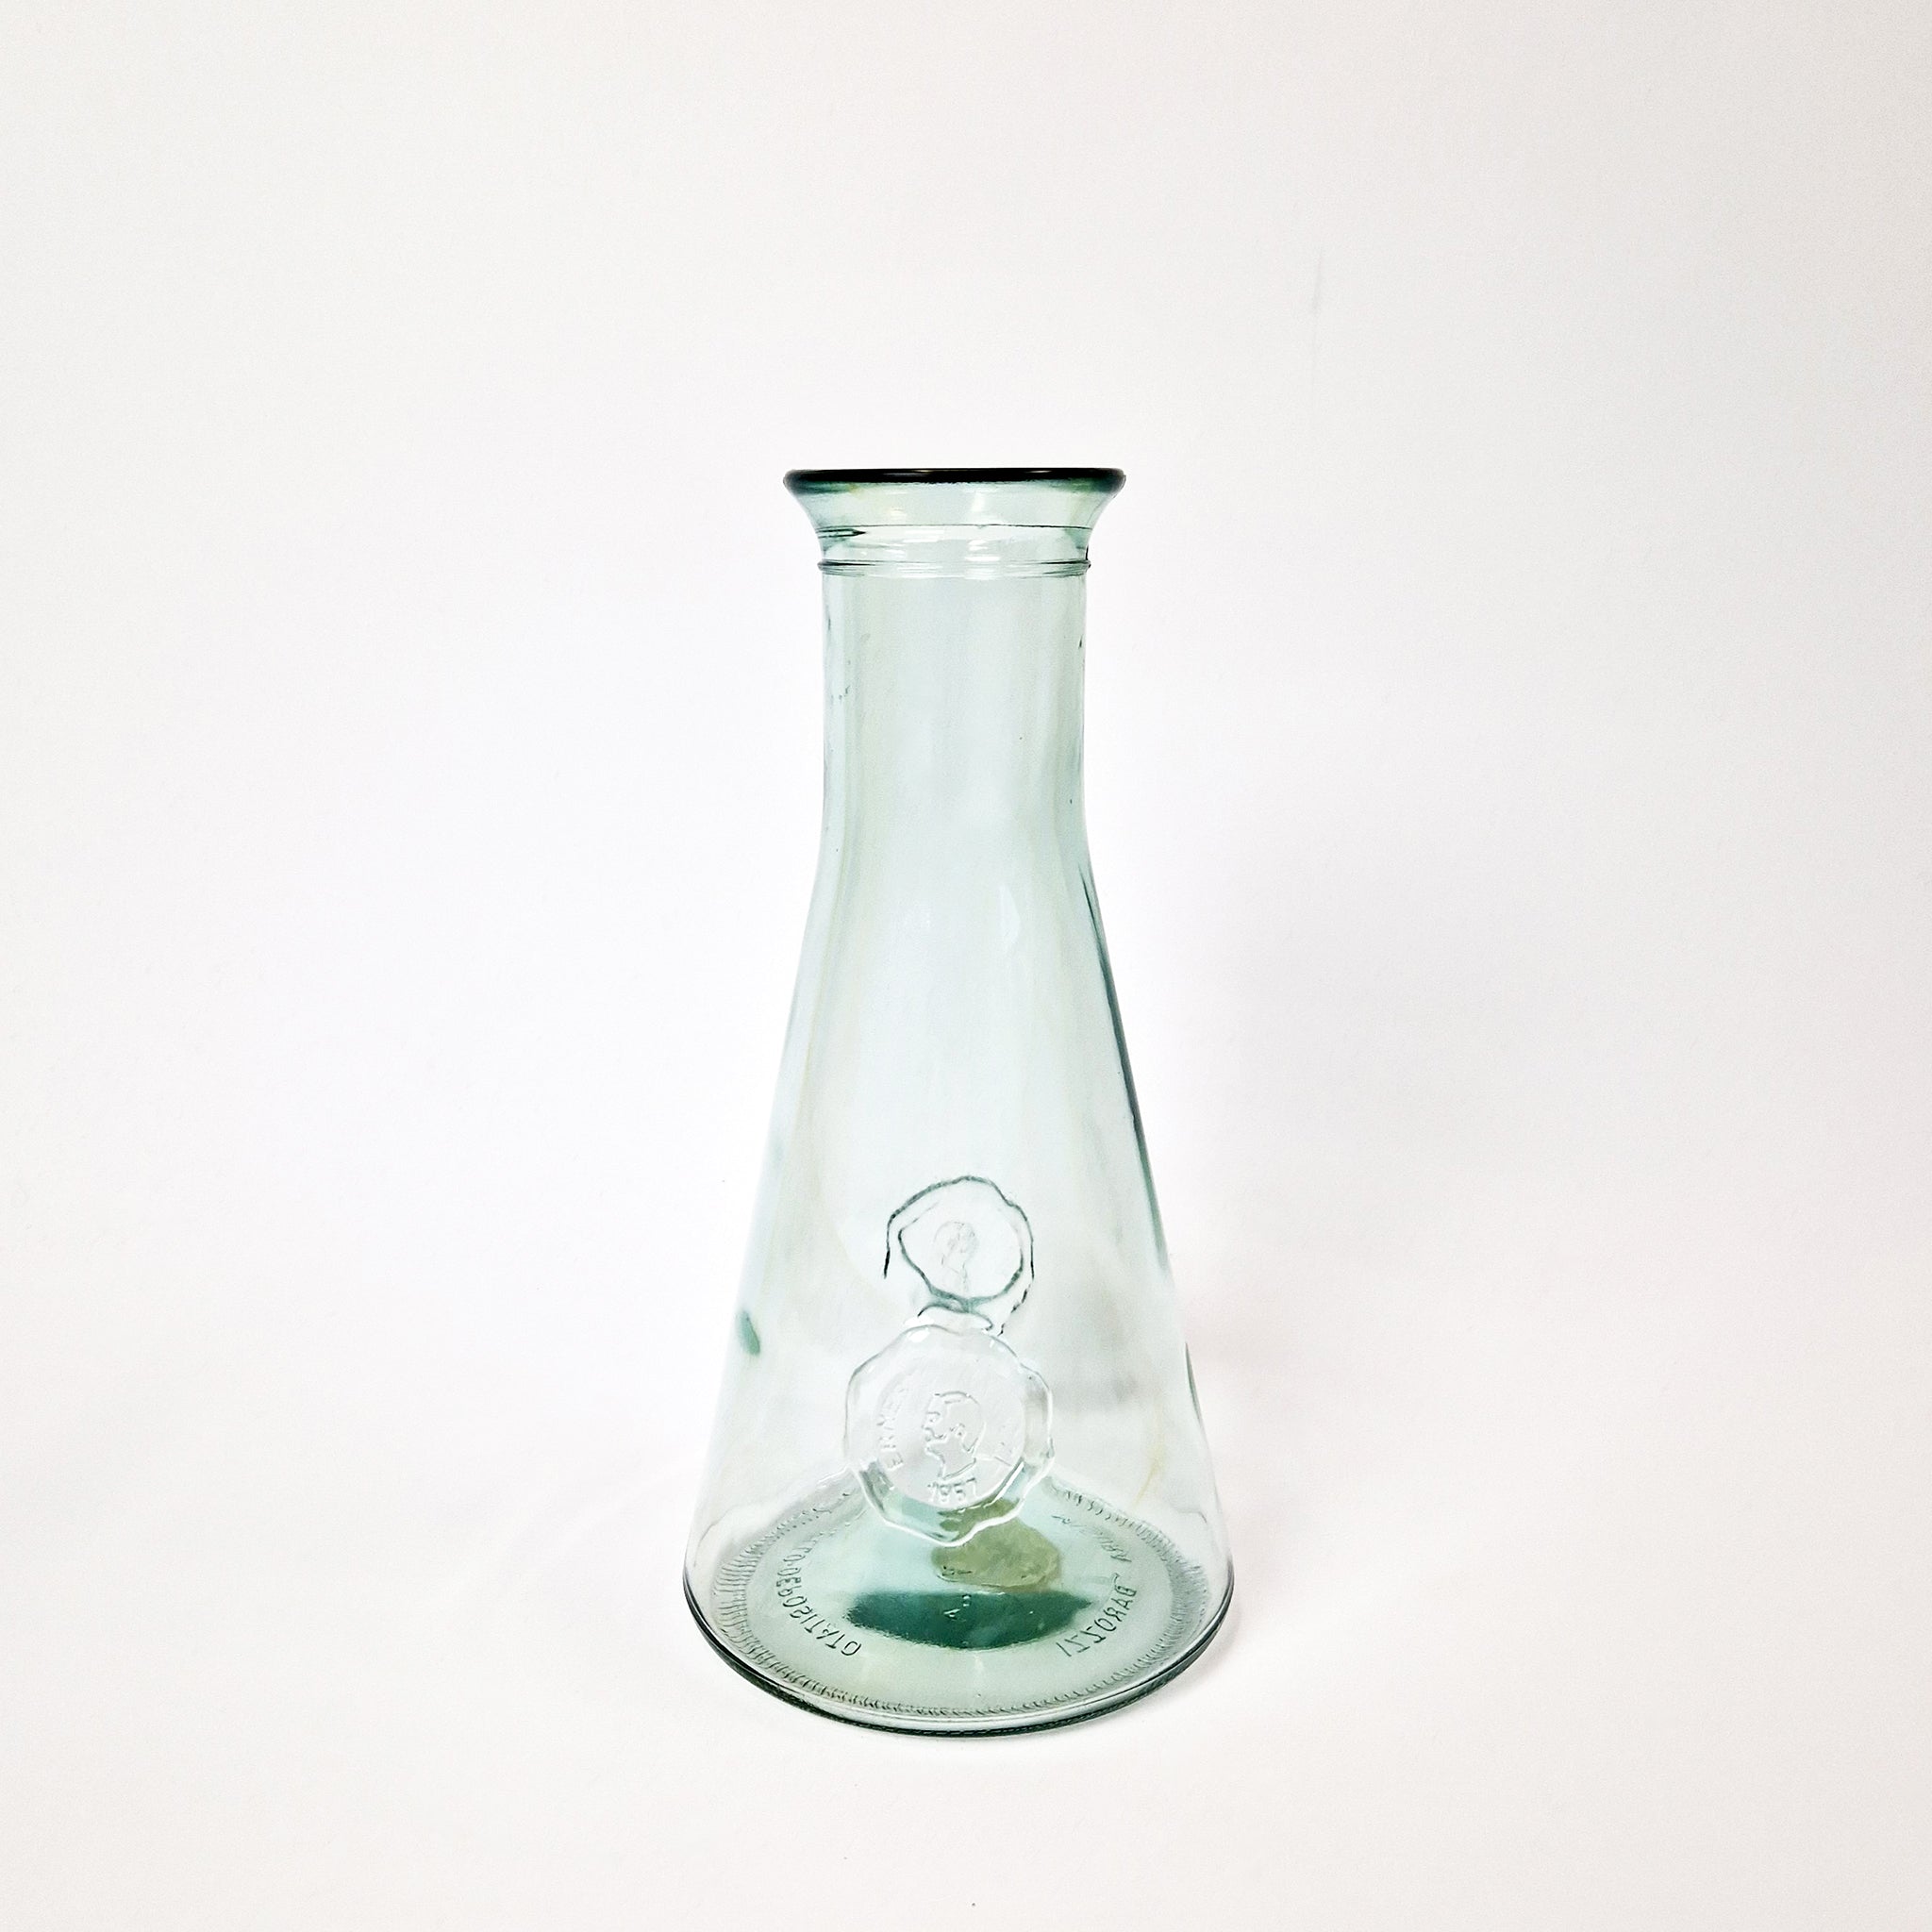 Vintage Ernesto Barozzi glass bottle